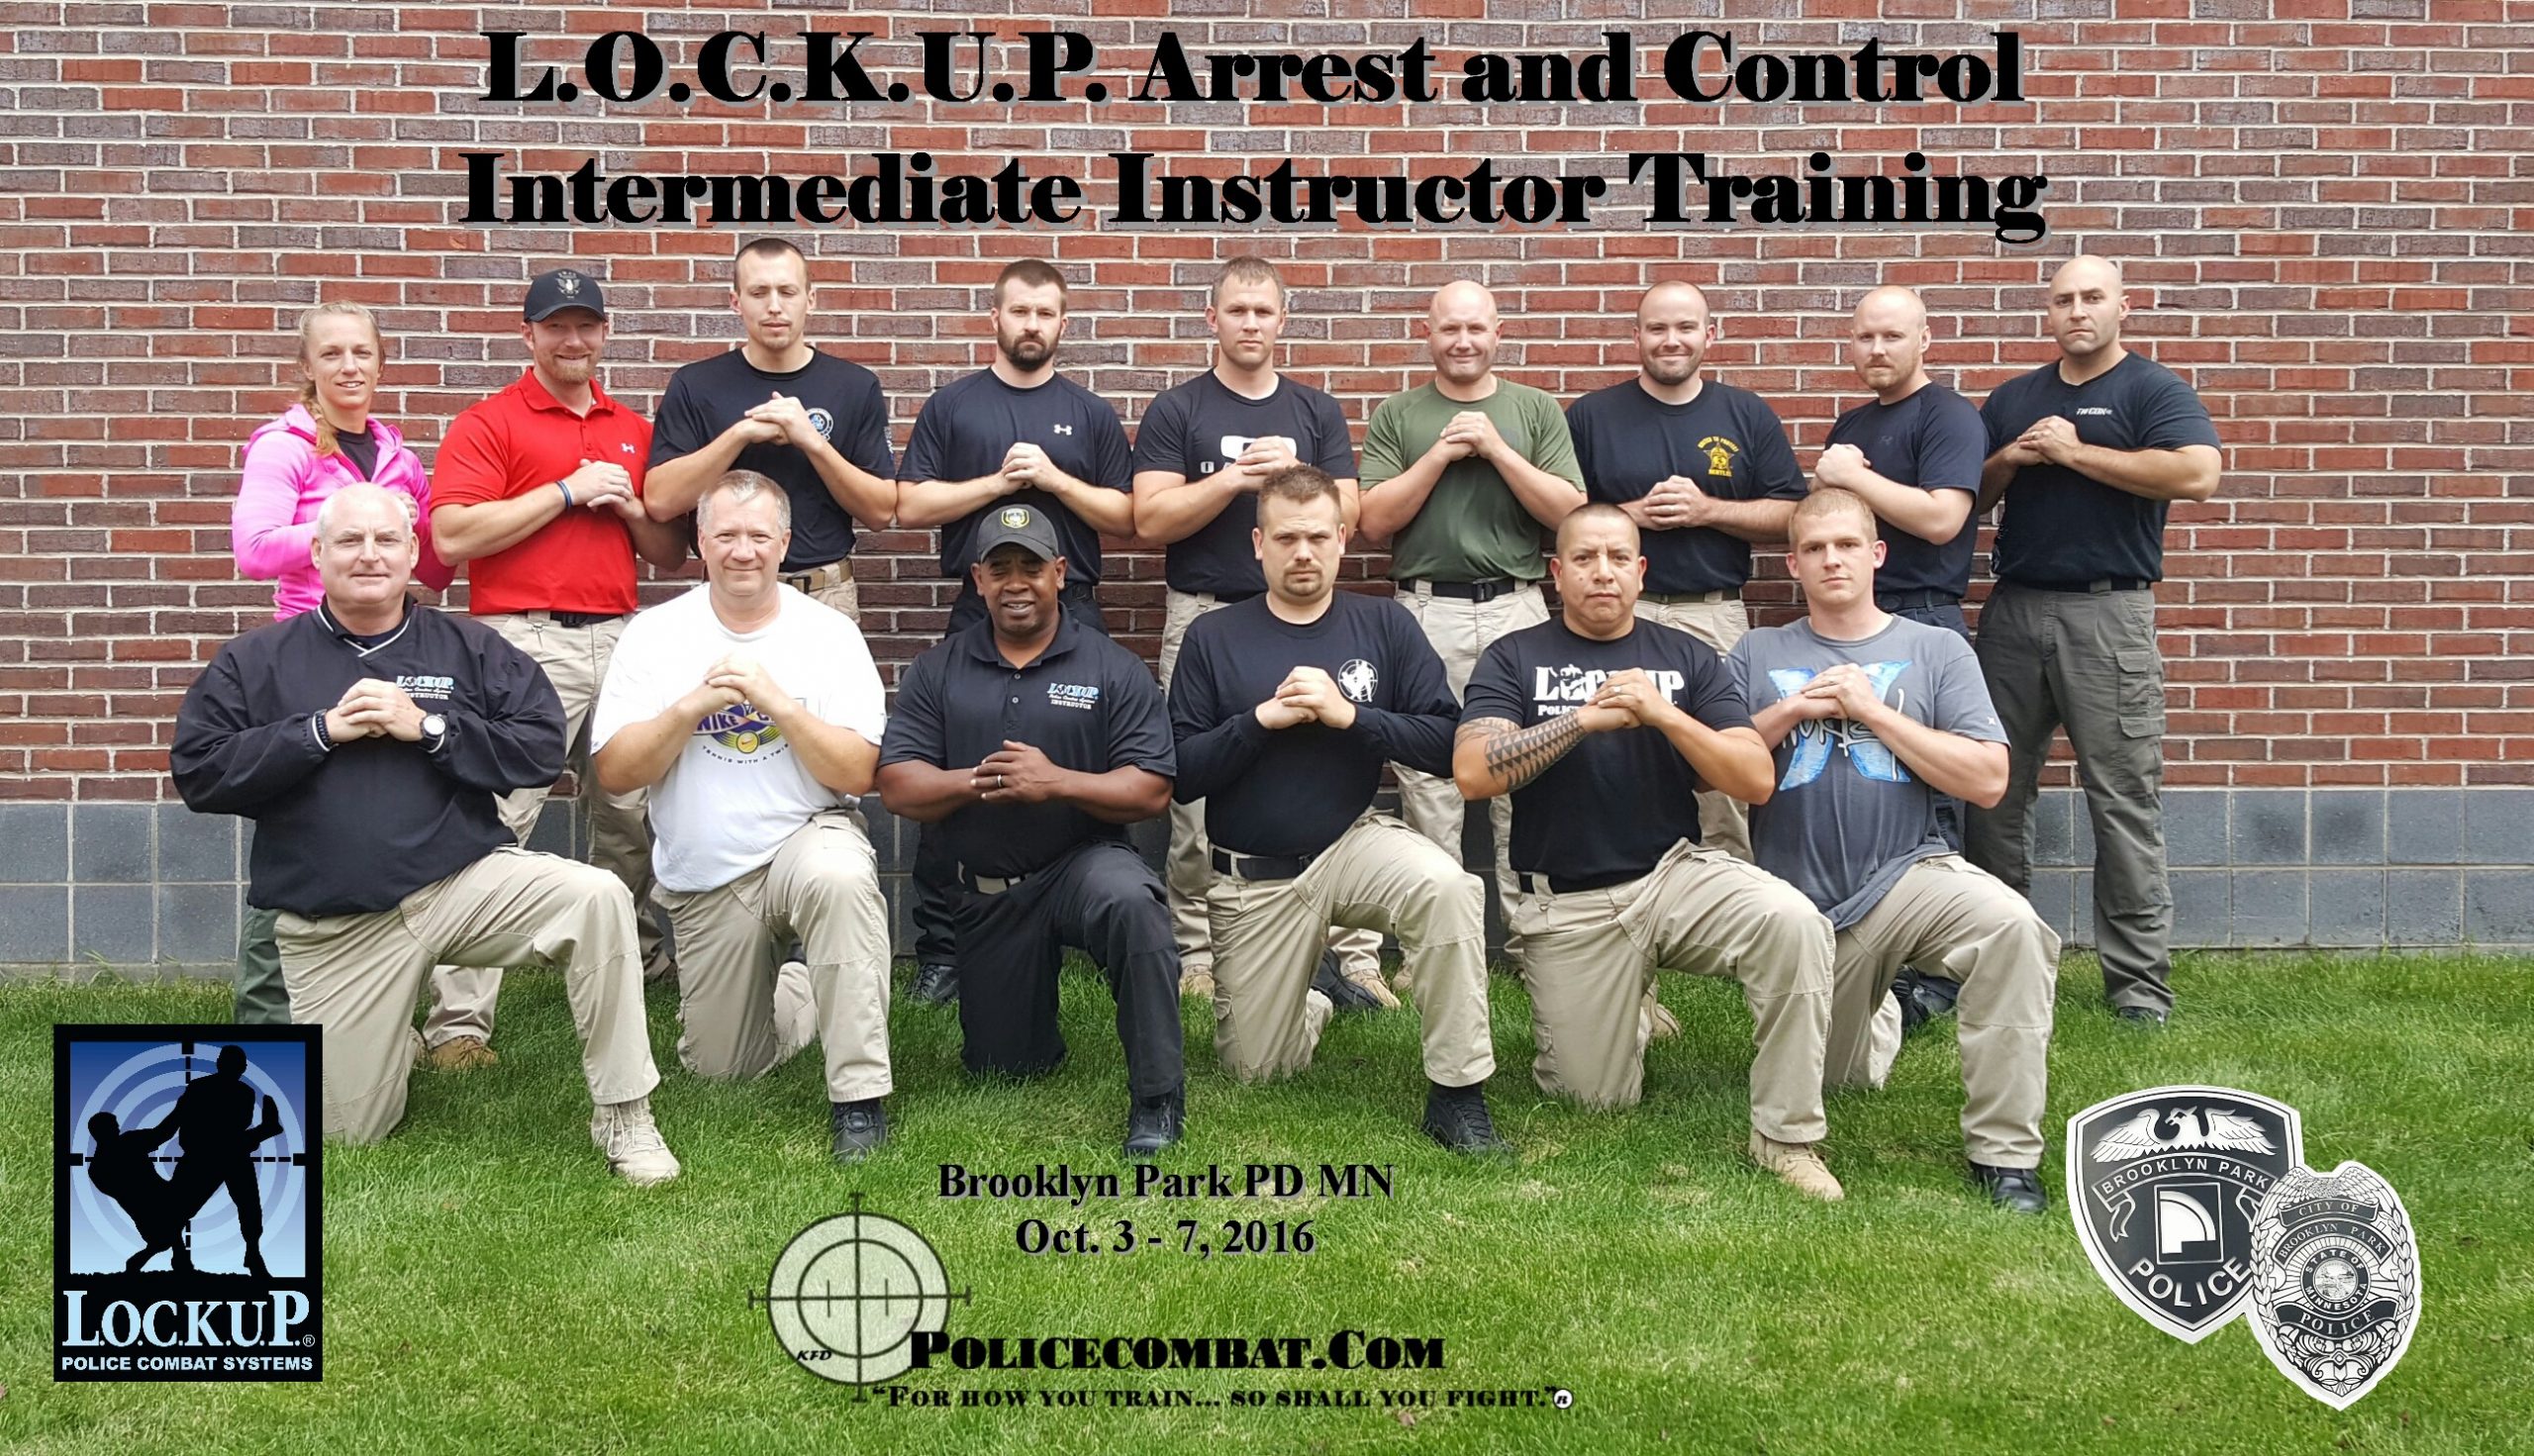 Brooklyn Park MN – LOCKUP Intermediate Instructor Training